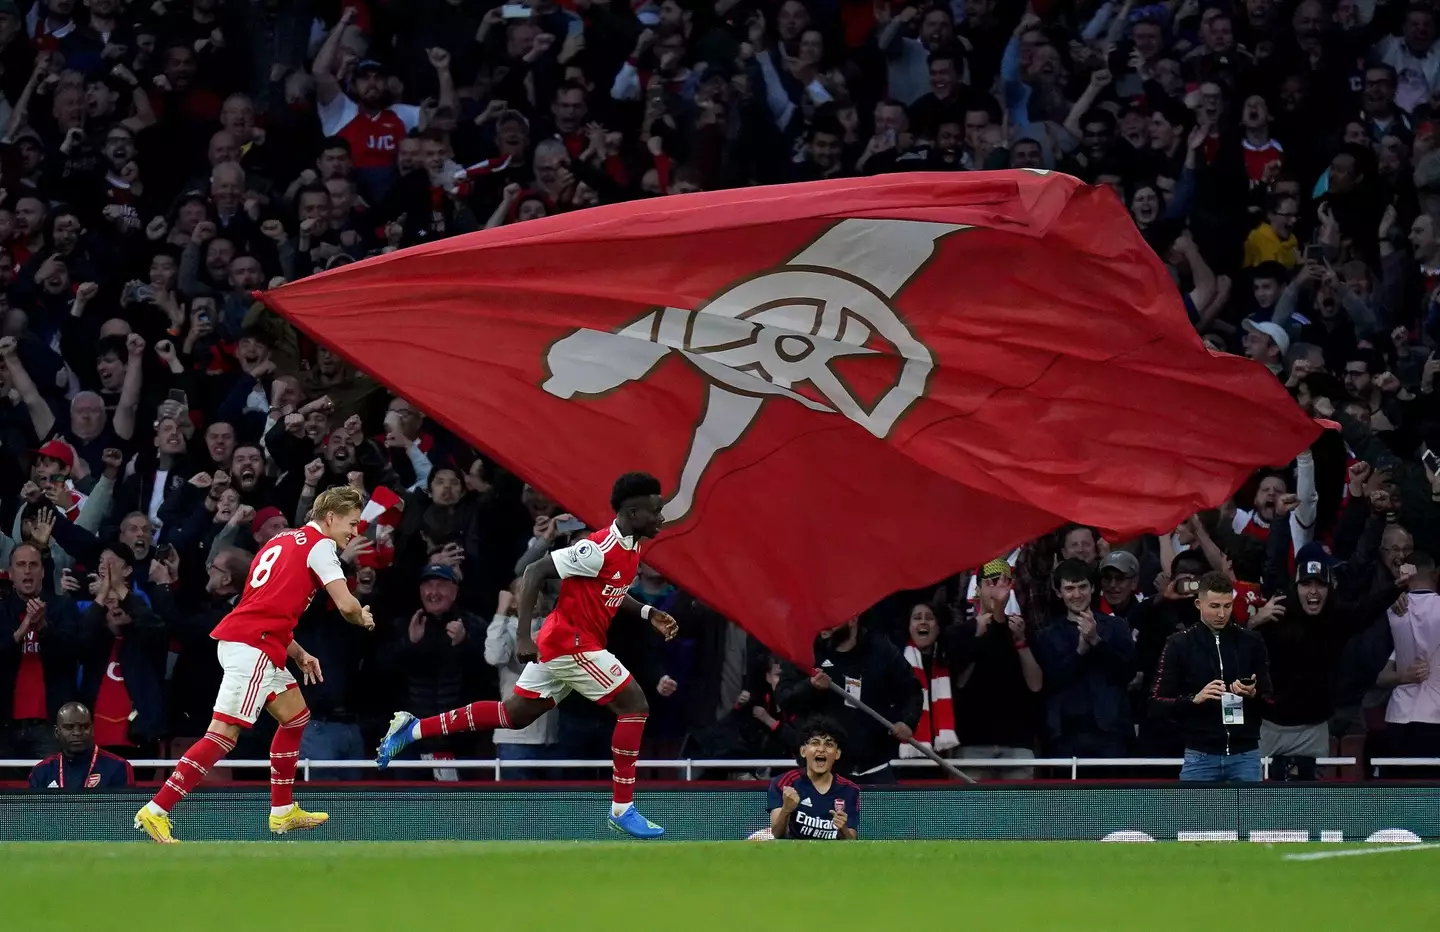 Liverpool were beaten 3-2 by Arsenal on Sunday (Image: Alamy)